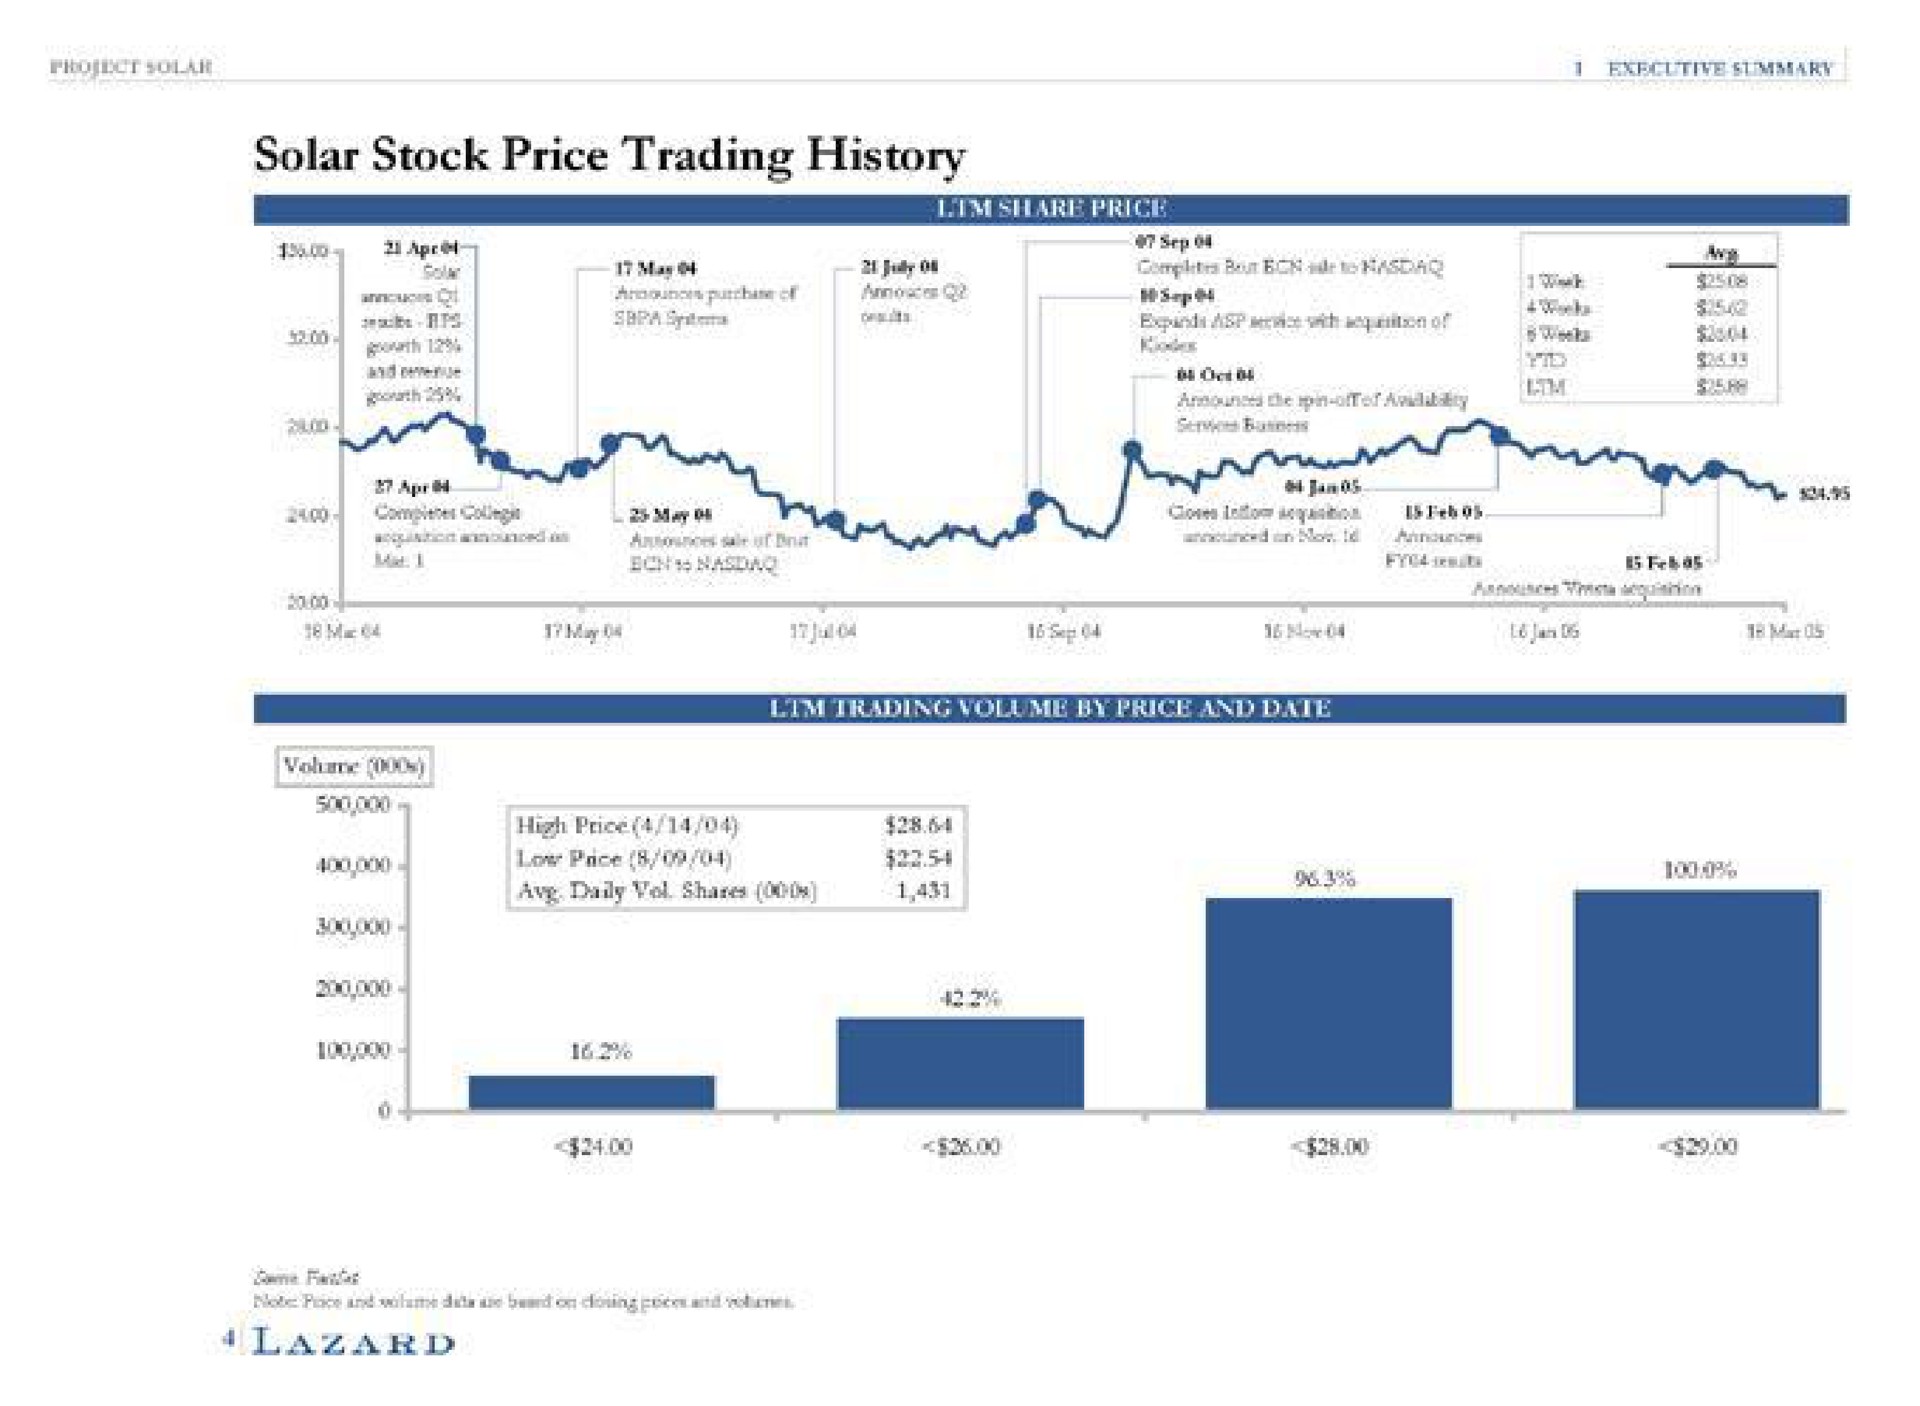 solar stock price trading history on low price | Lazard